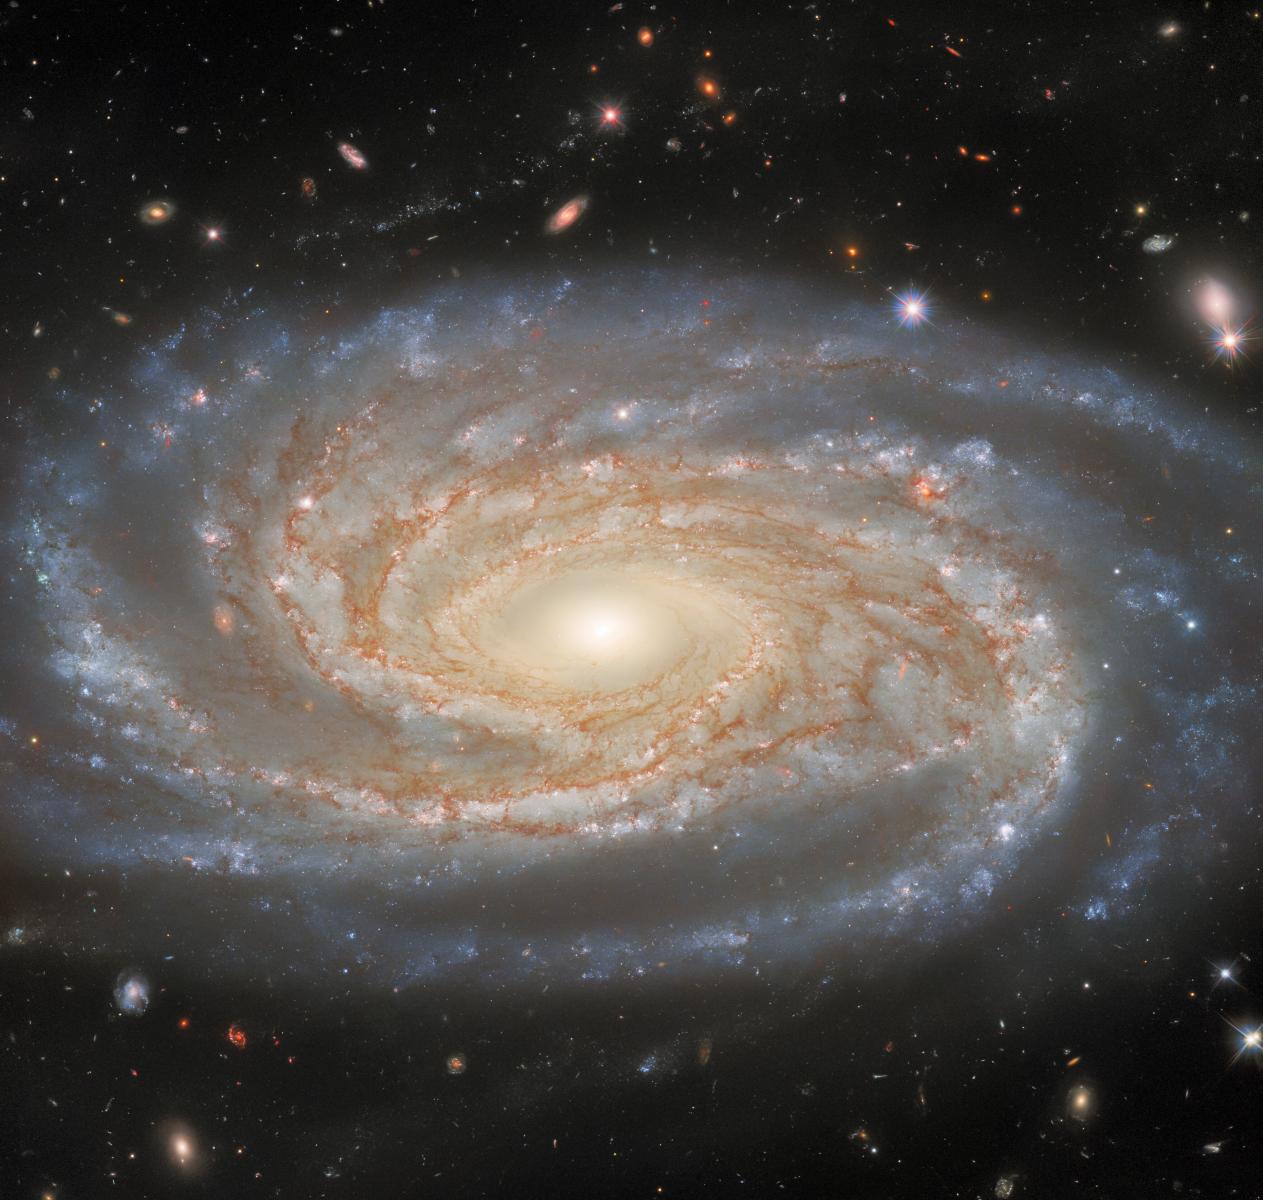 NGC 7038.jpg